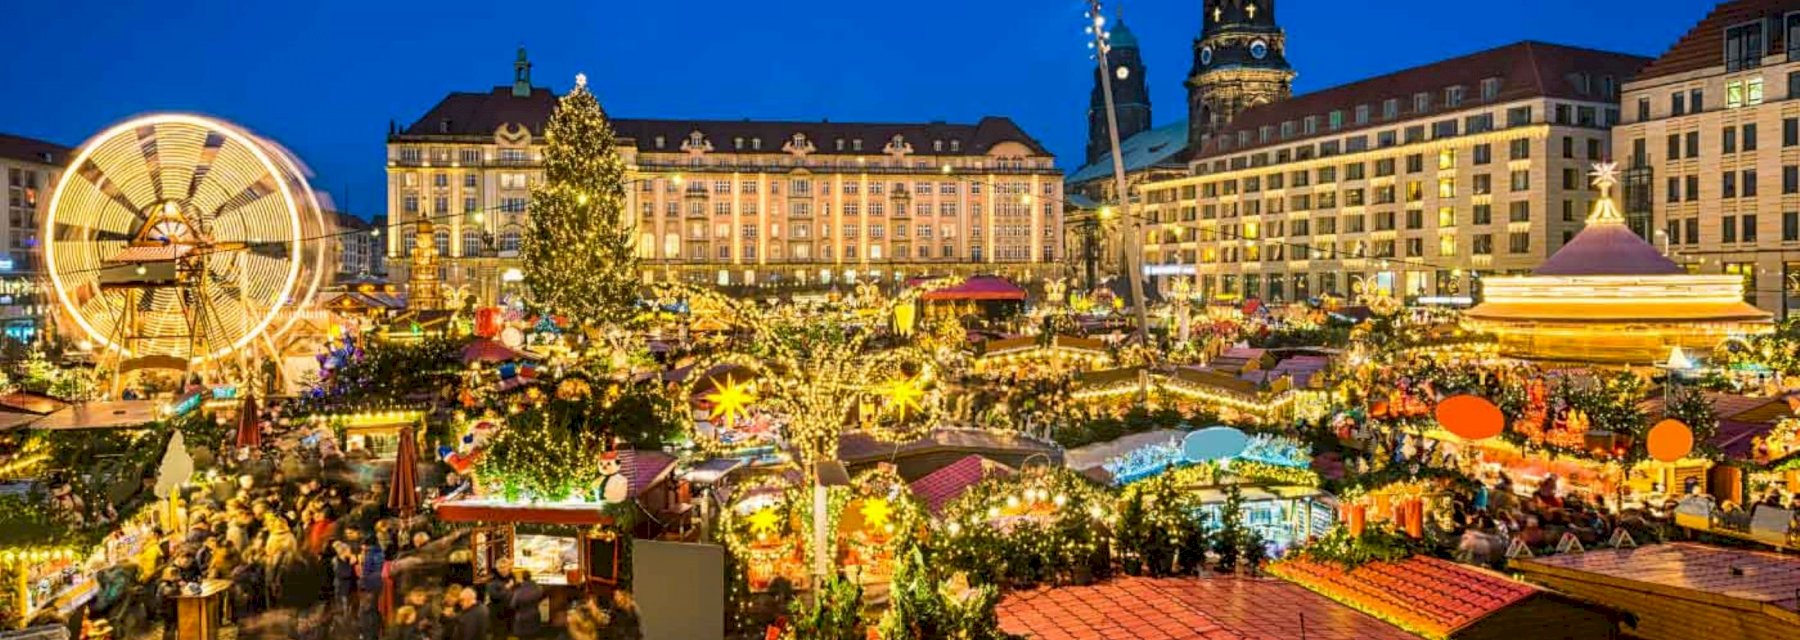 Top 7 European Christmas locations around the world